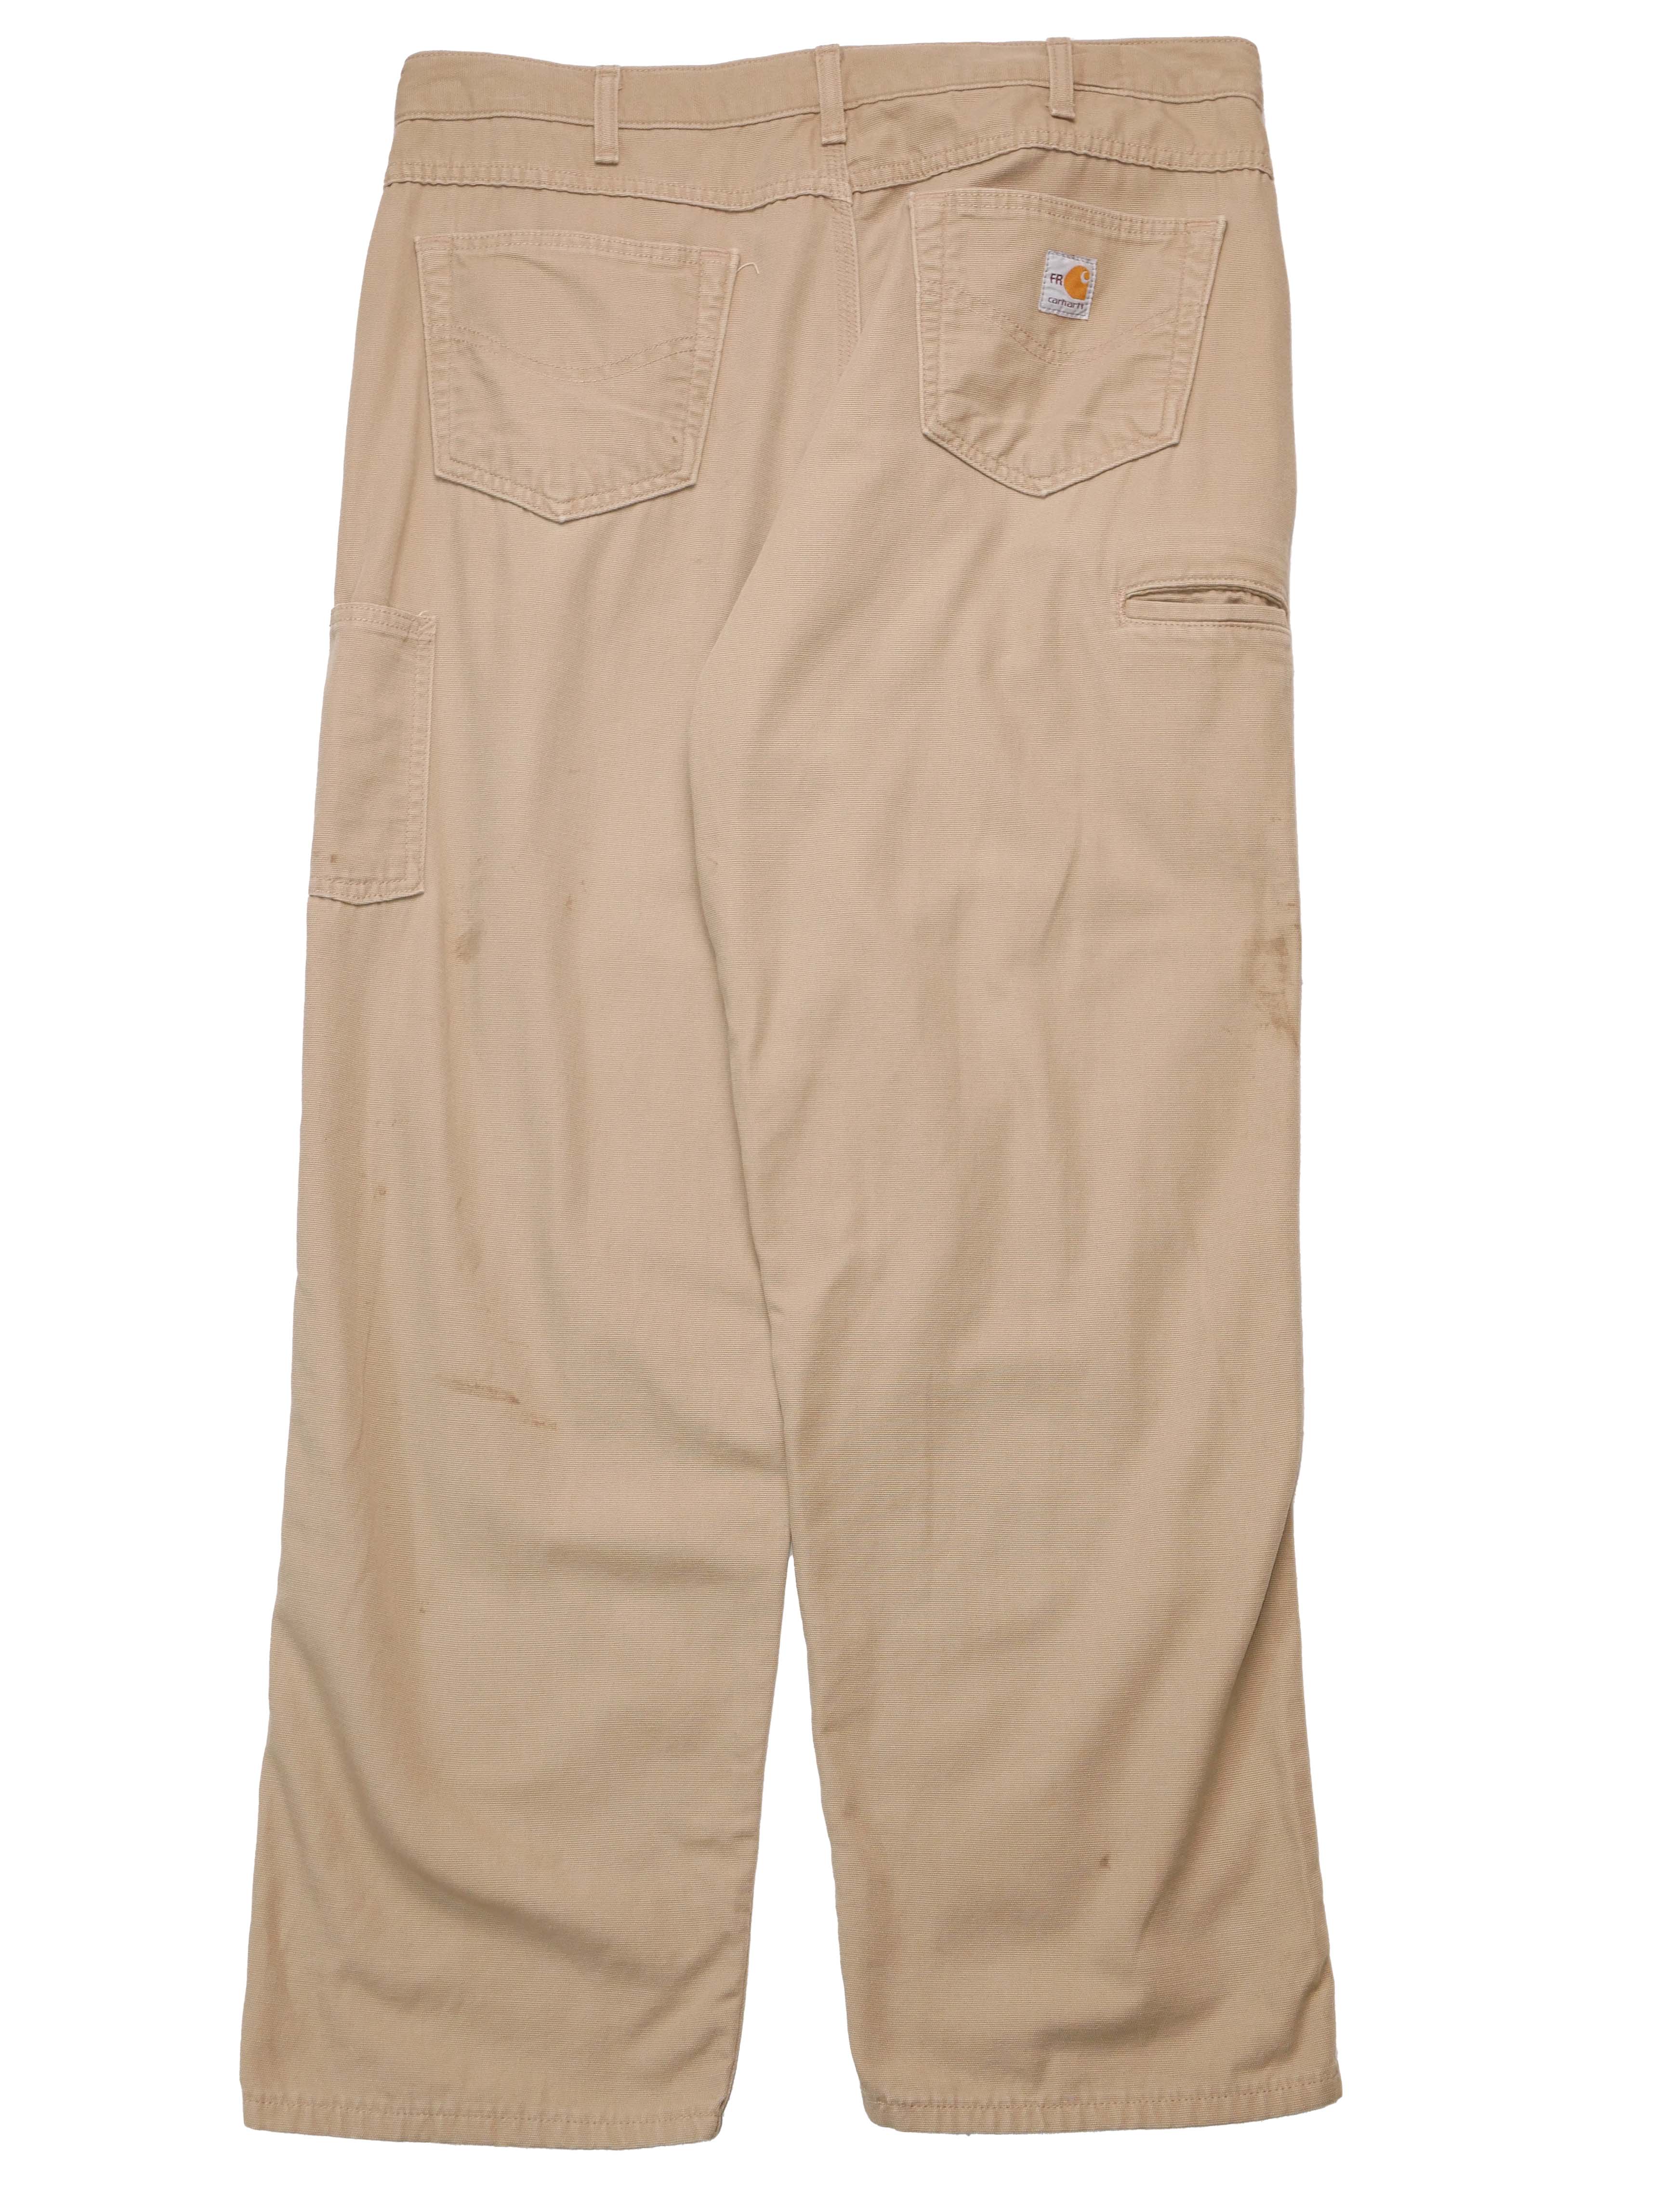 Vintage 90s Carhartt Workwear Pants (34)-PANT-CARHARTT-SIZE 34-Room On Fire